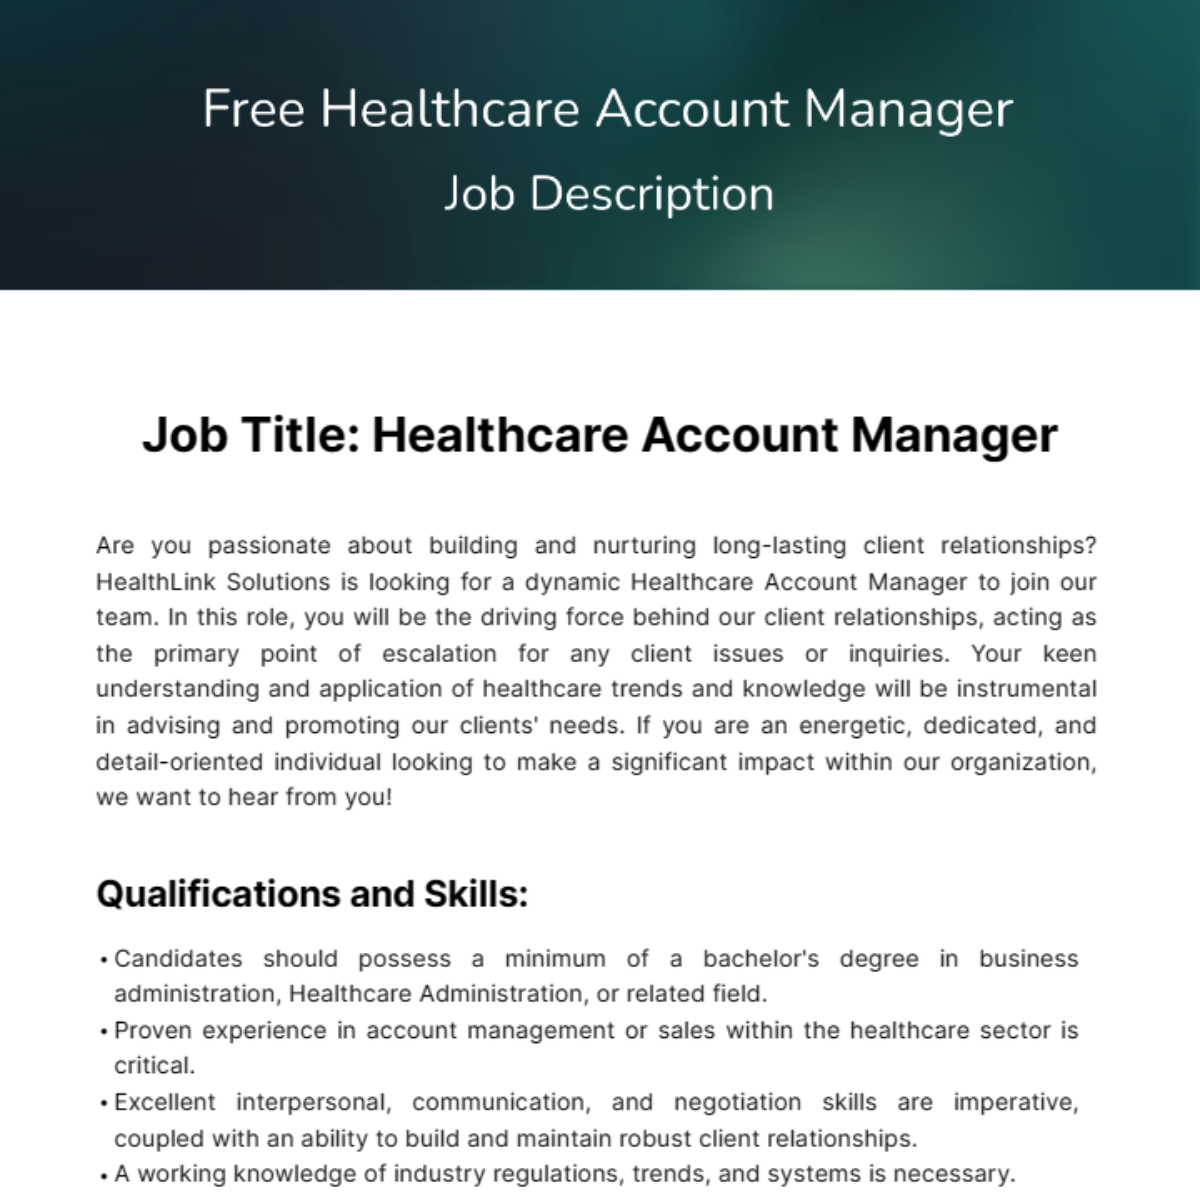 Healthcare Account Manager Job Description Template